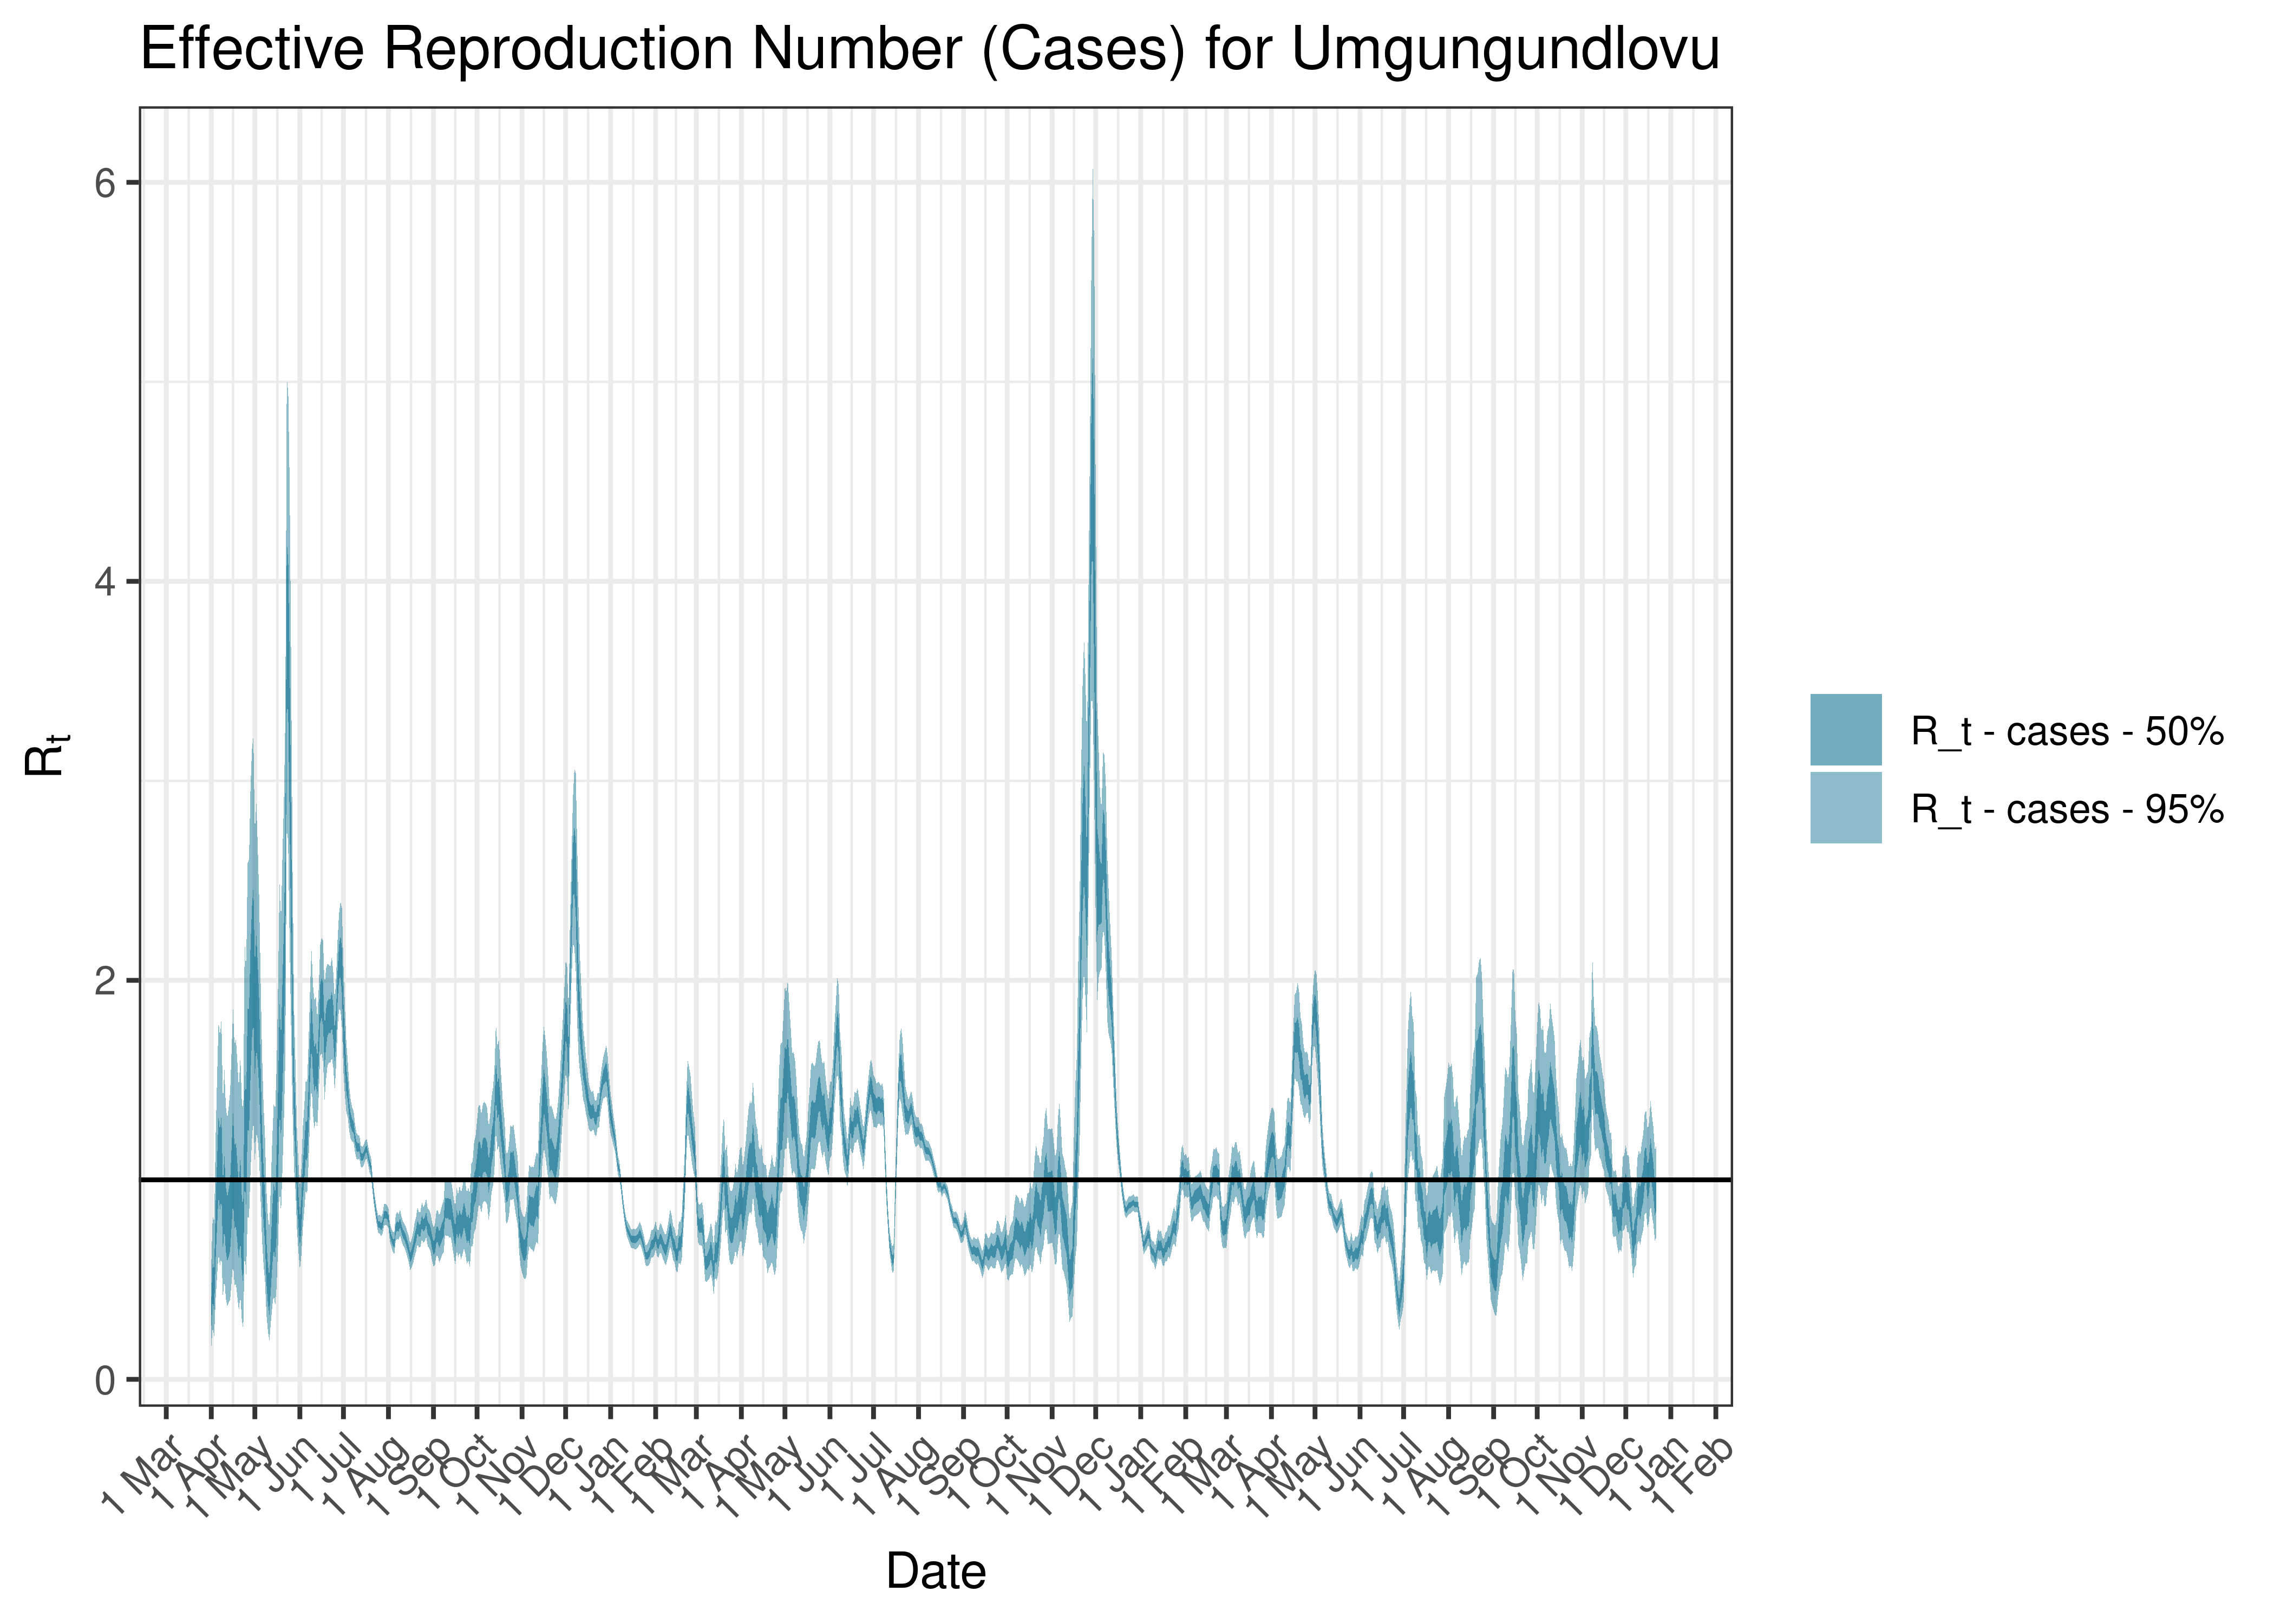 Estimated Effective Reproduction Number Based on Cases for Umgungundlovu since 1 April 2020